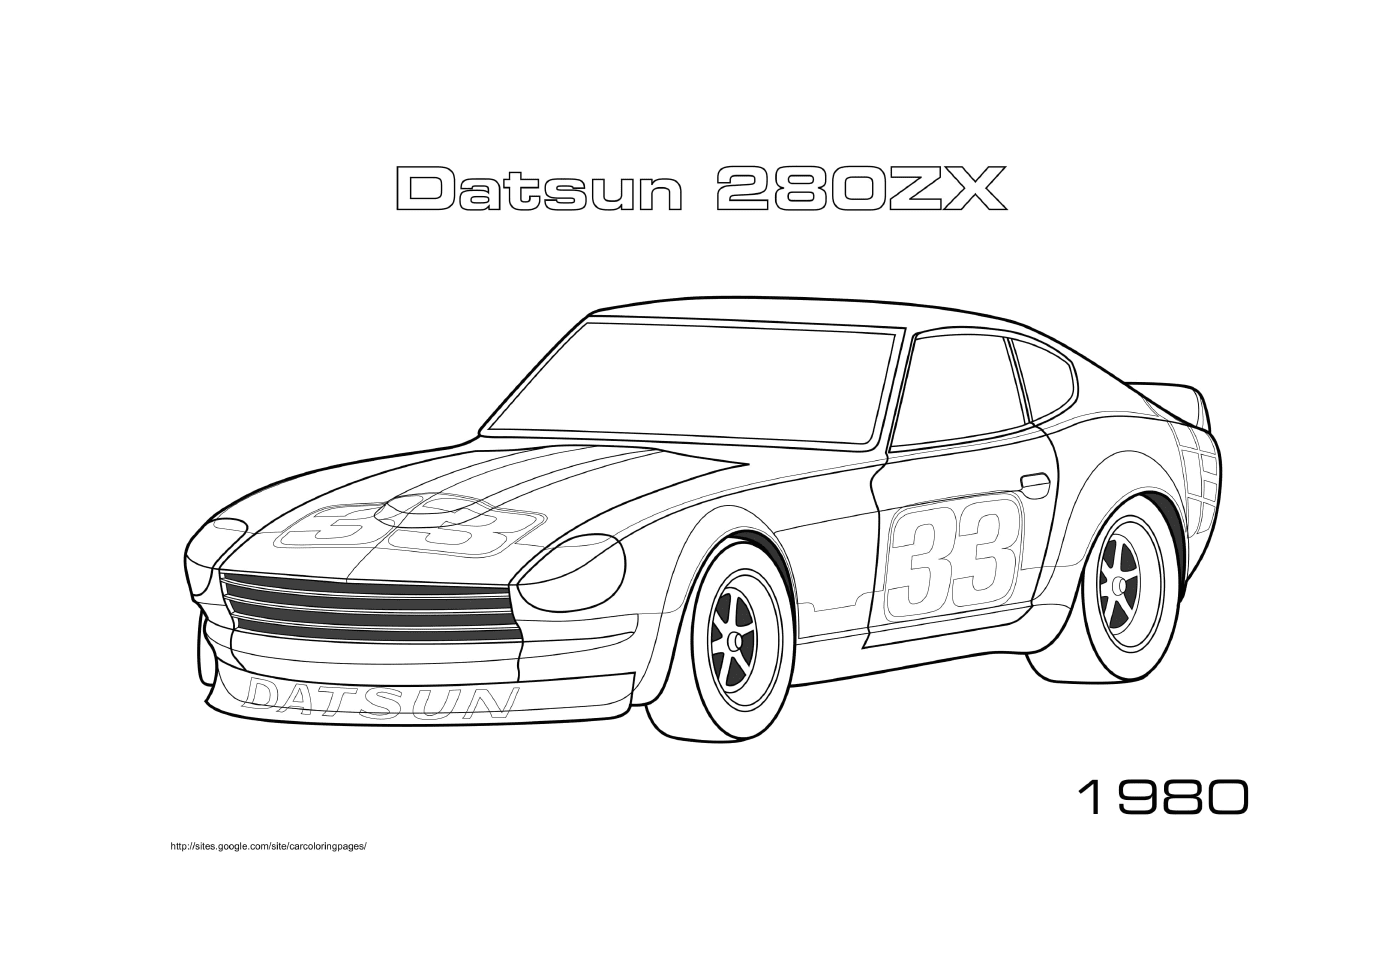 Datsun 280zx 1980